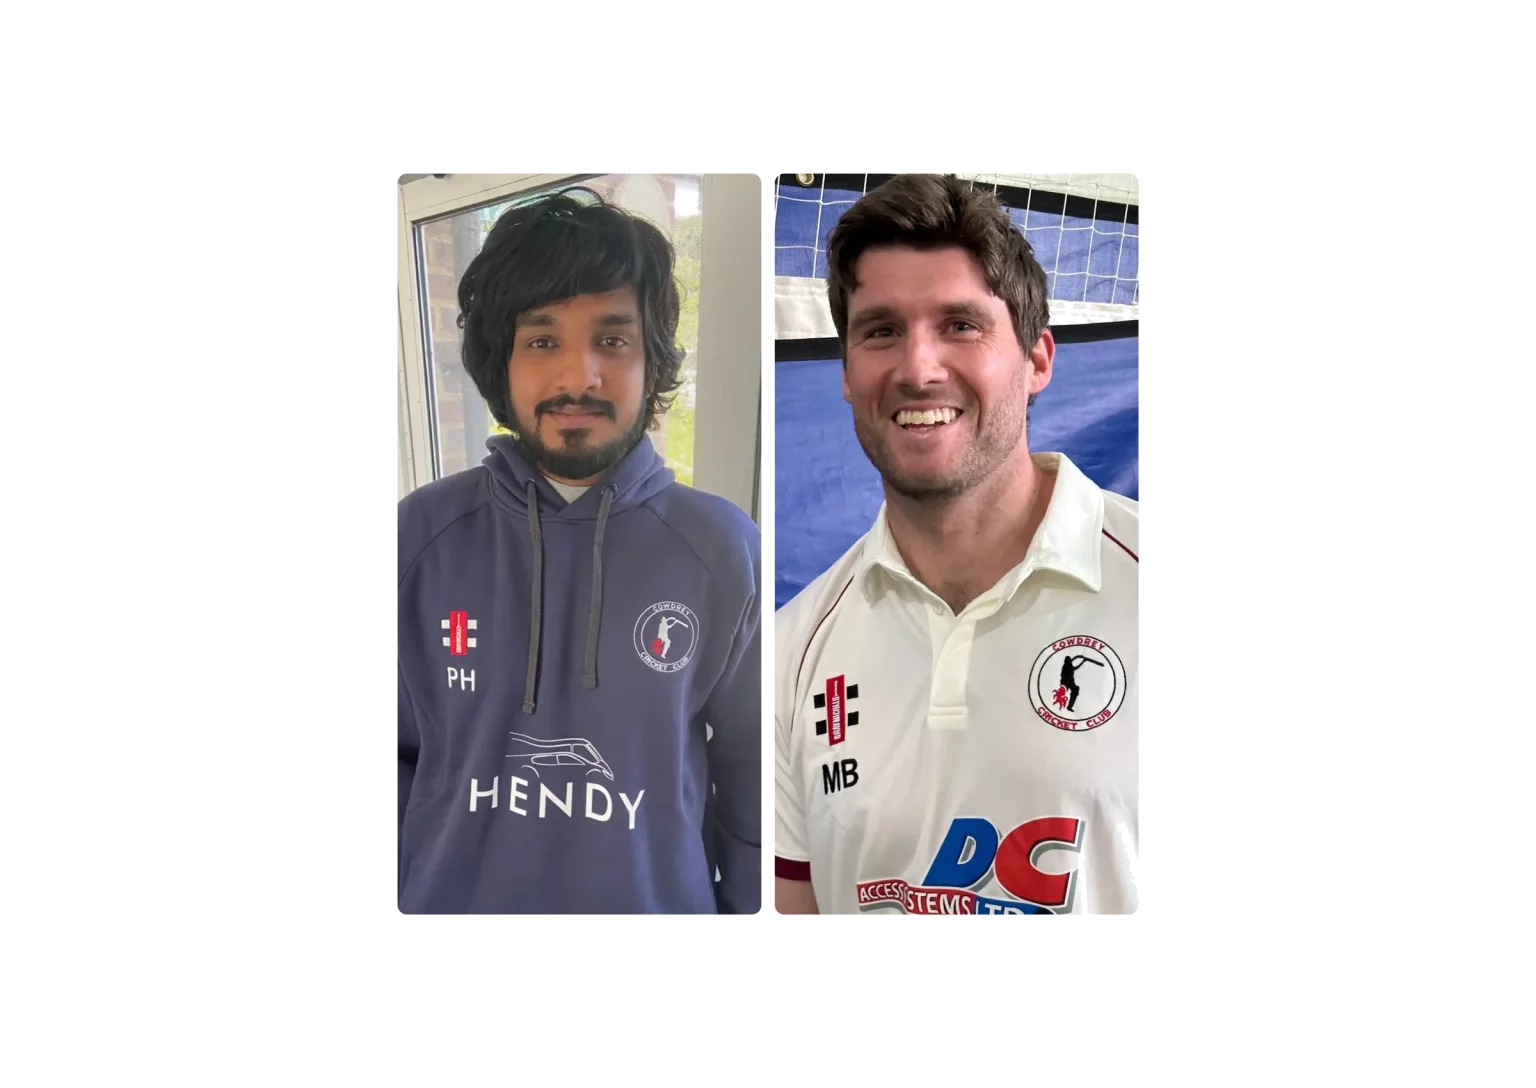 Pramud Hettiwatte & Mitchell Bowman join Cowdrey Cricket Club as Overseas